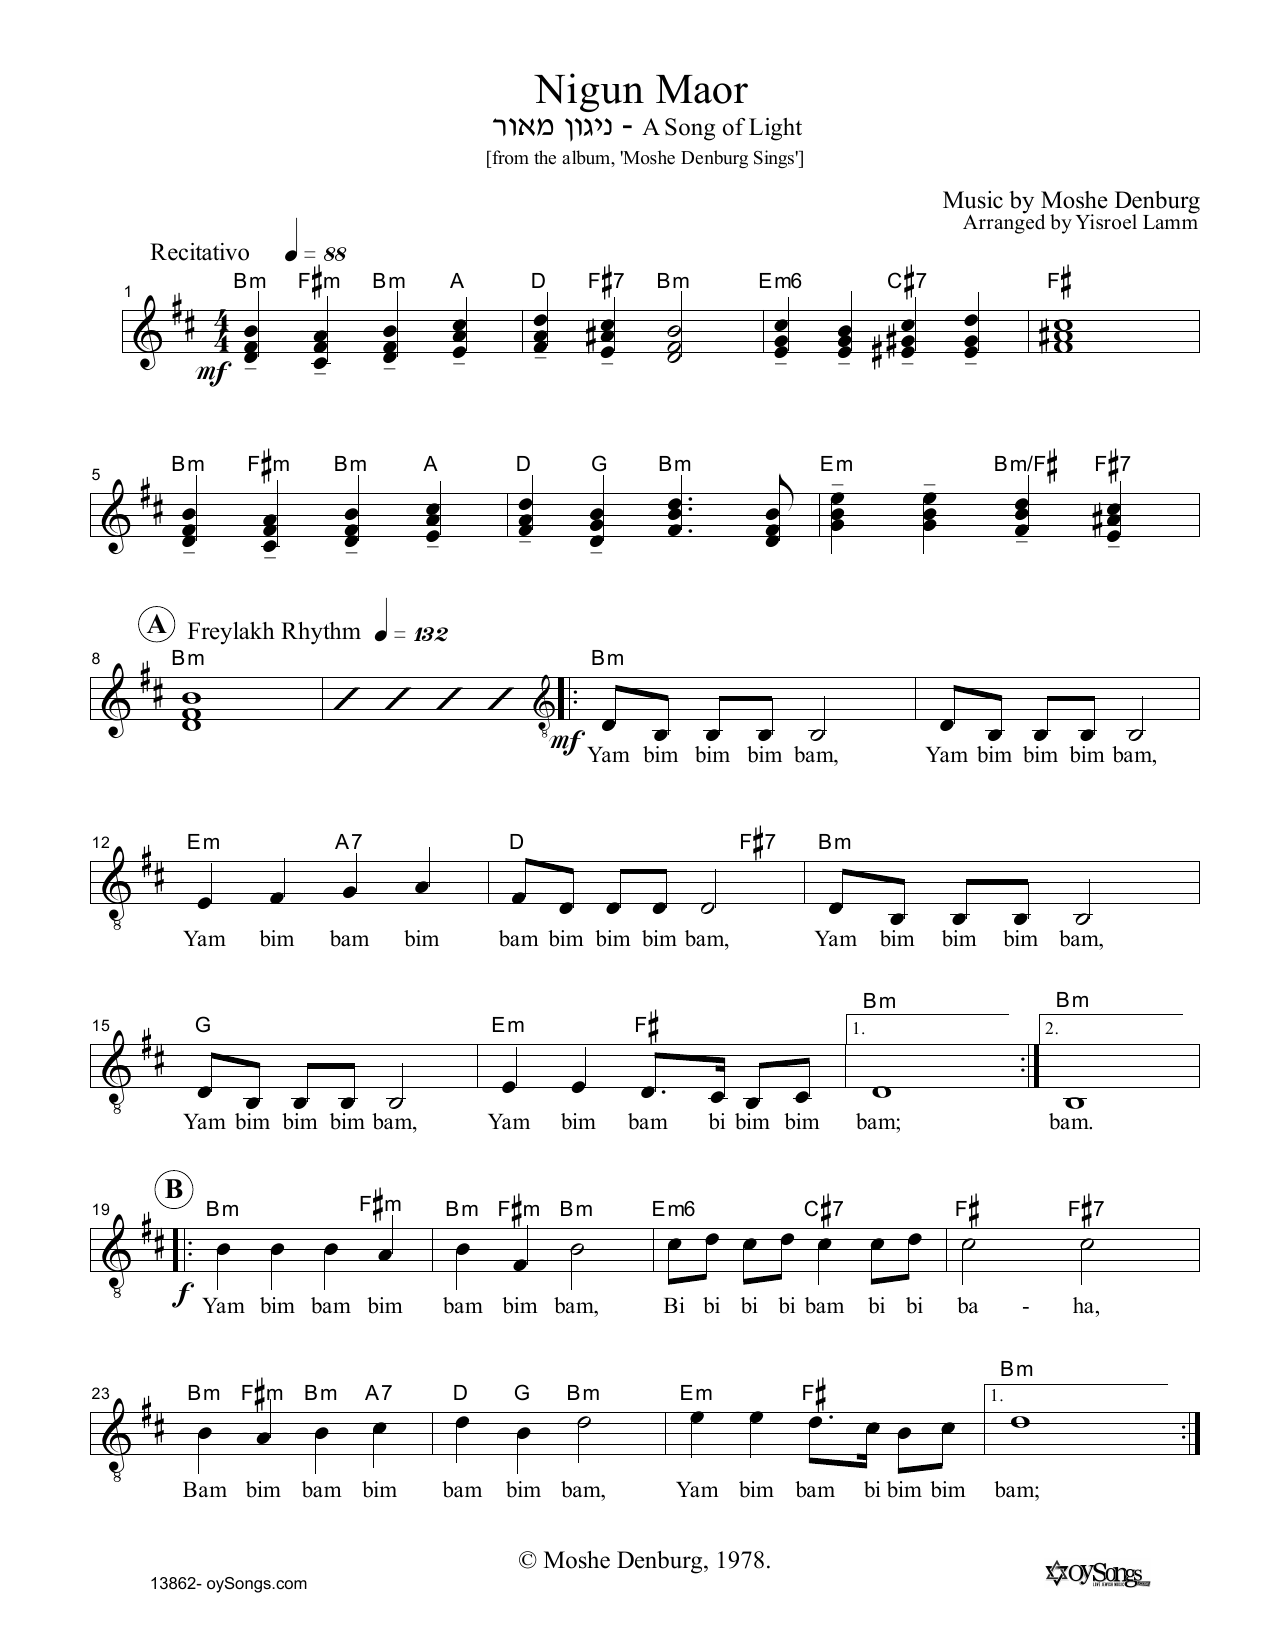 Download Moshe Denburg Nigun Maor Sheet Music and learn how to play Melody Line, Lyrics & Chords PDF digital score in minutes